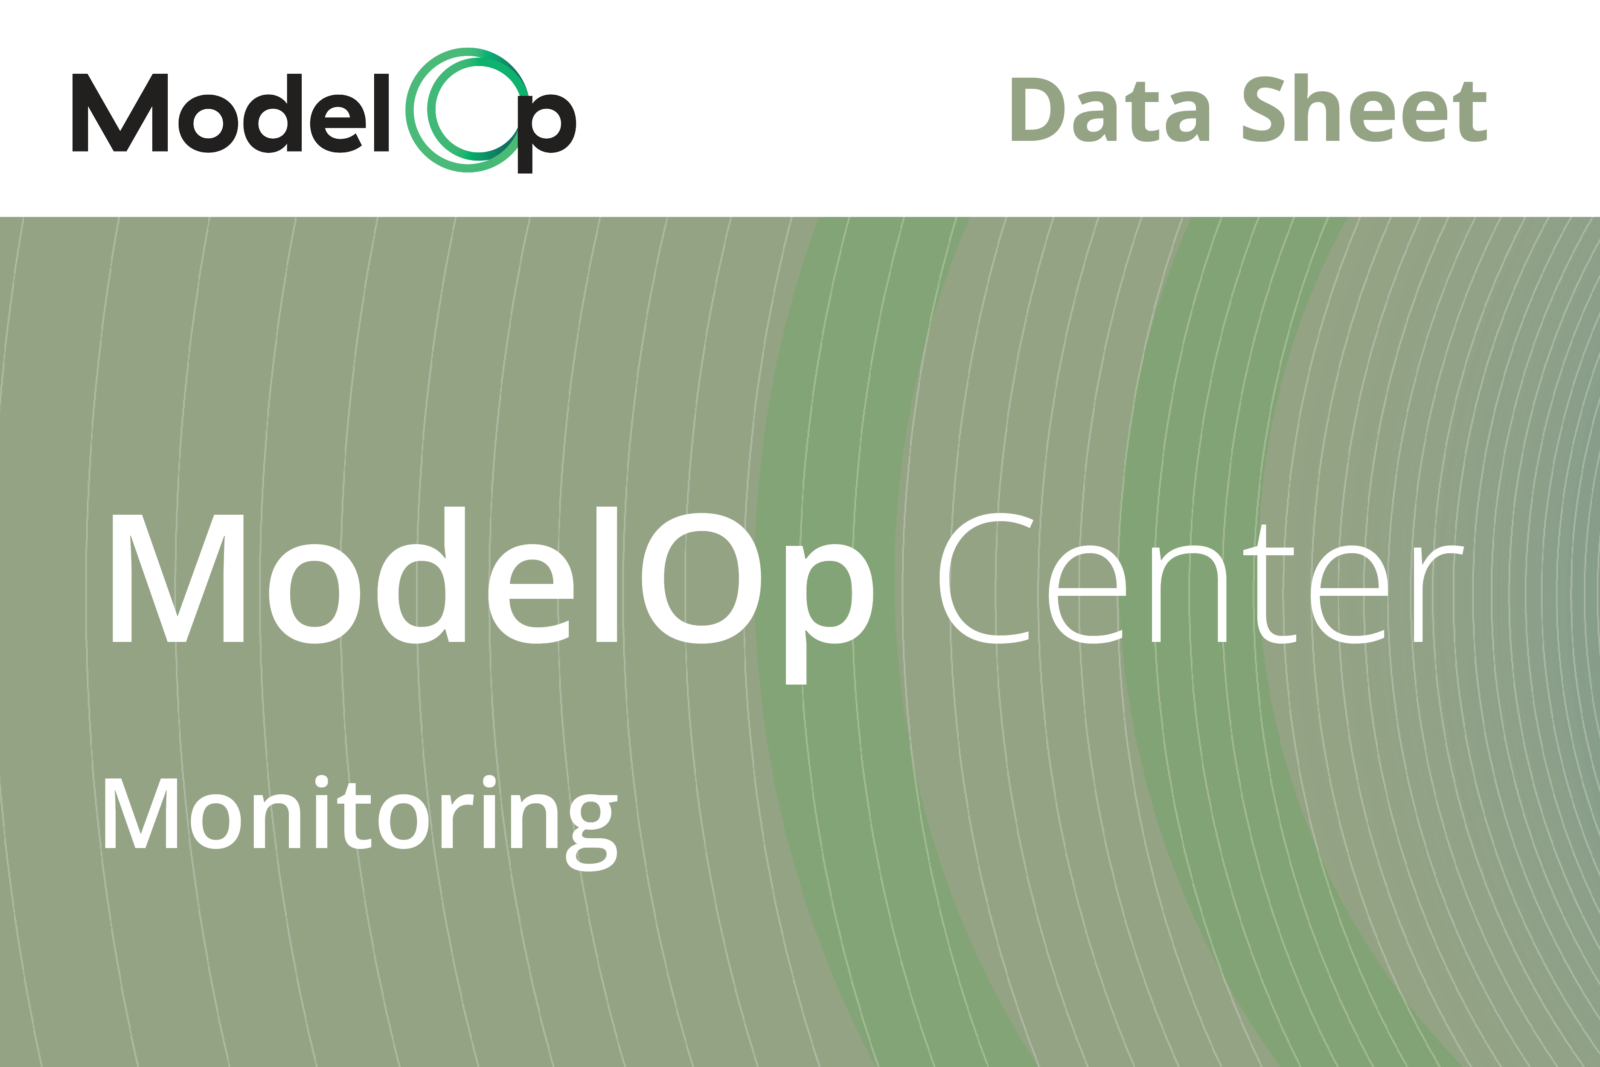 ModelOp Center – Monitoring Capabilities Data Sheet